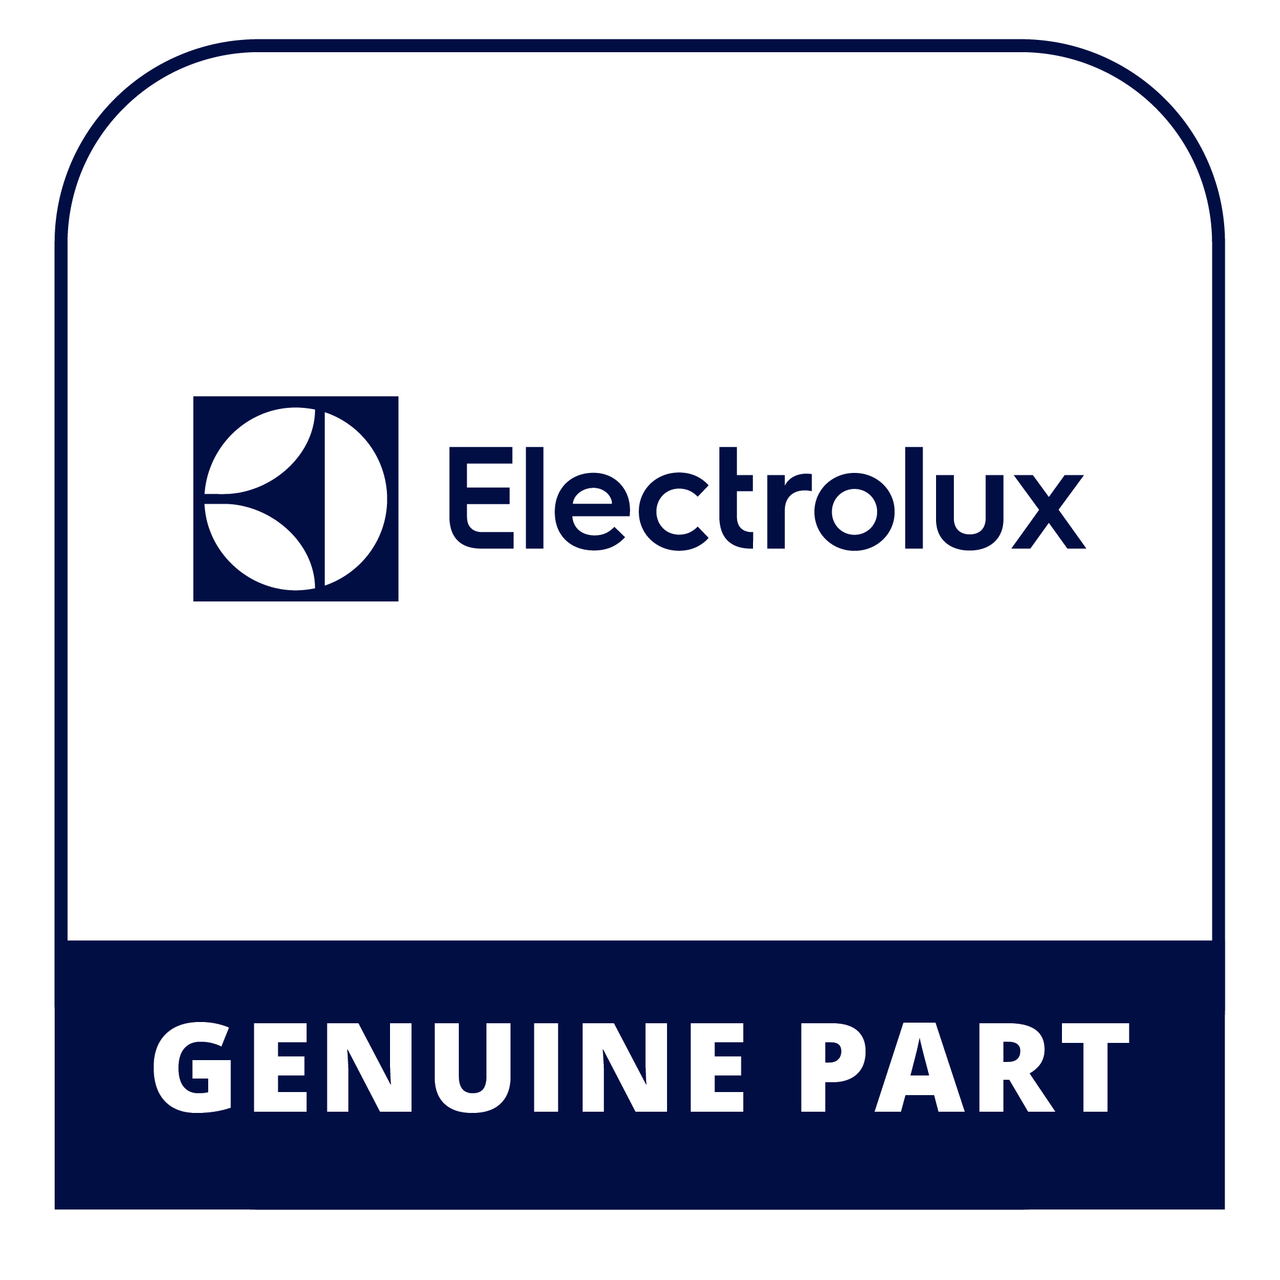 Frigidaire - Electrolux 5304492202 Knob - Genuine Electrolux Part